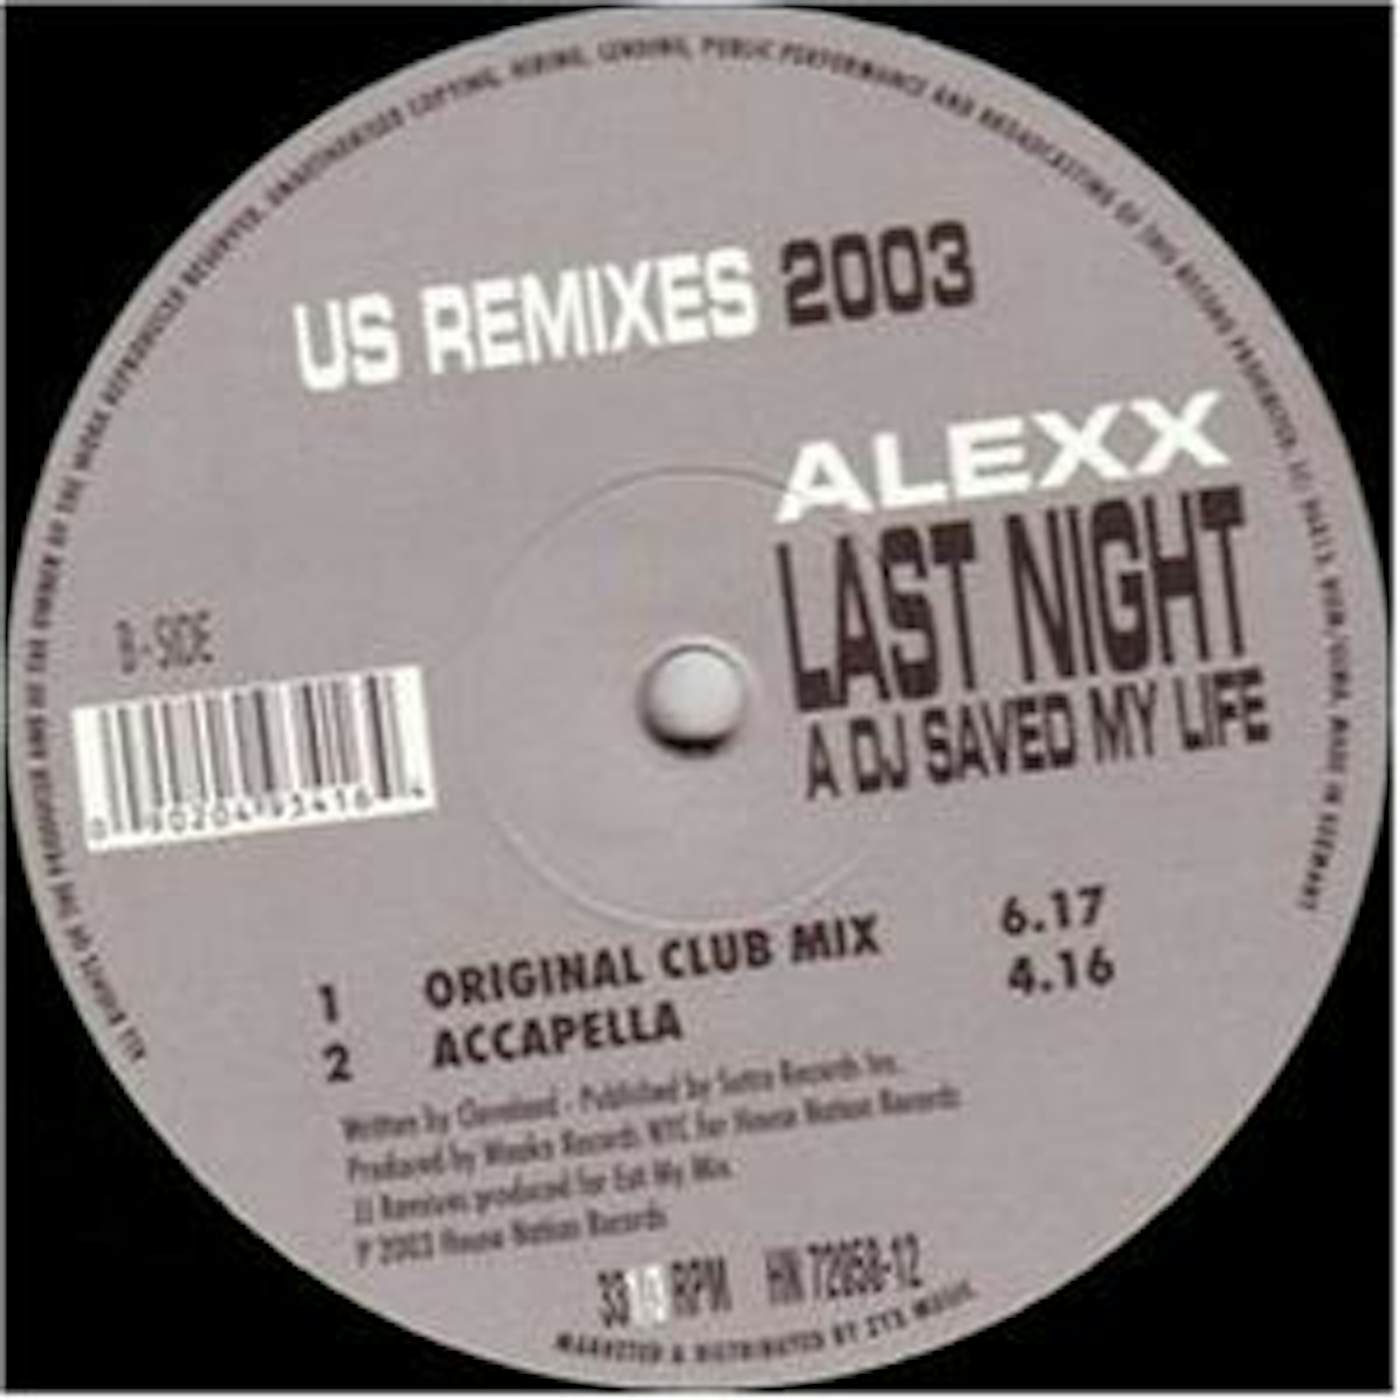 Alexx LAST NIGHT A DJ SAVED MY LIFE Vinyl Record